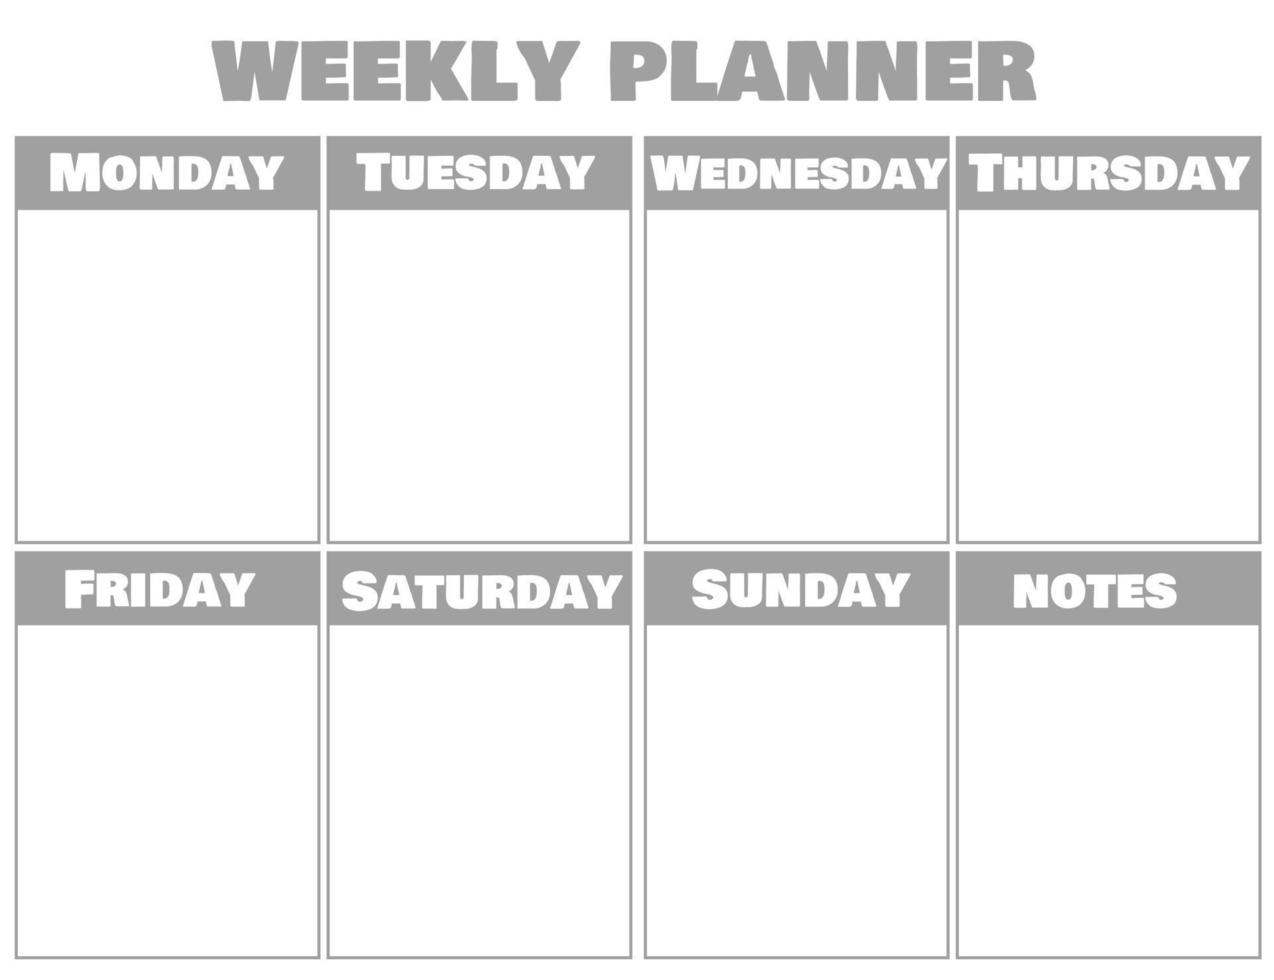 planner.calendar template.schedule semanal em branco para planejar a semana. vetor